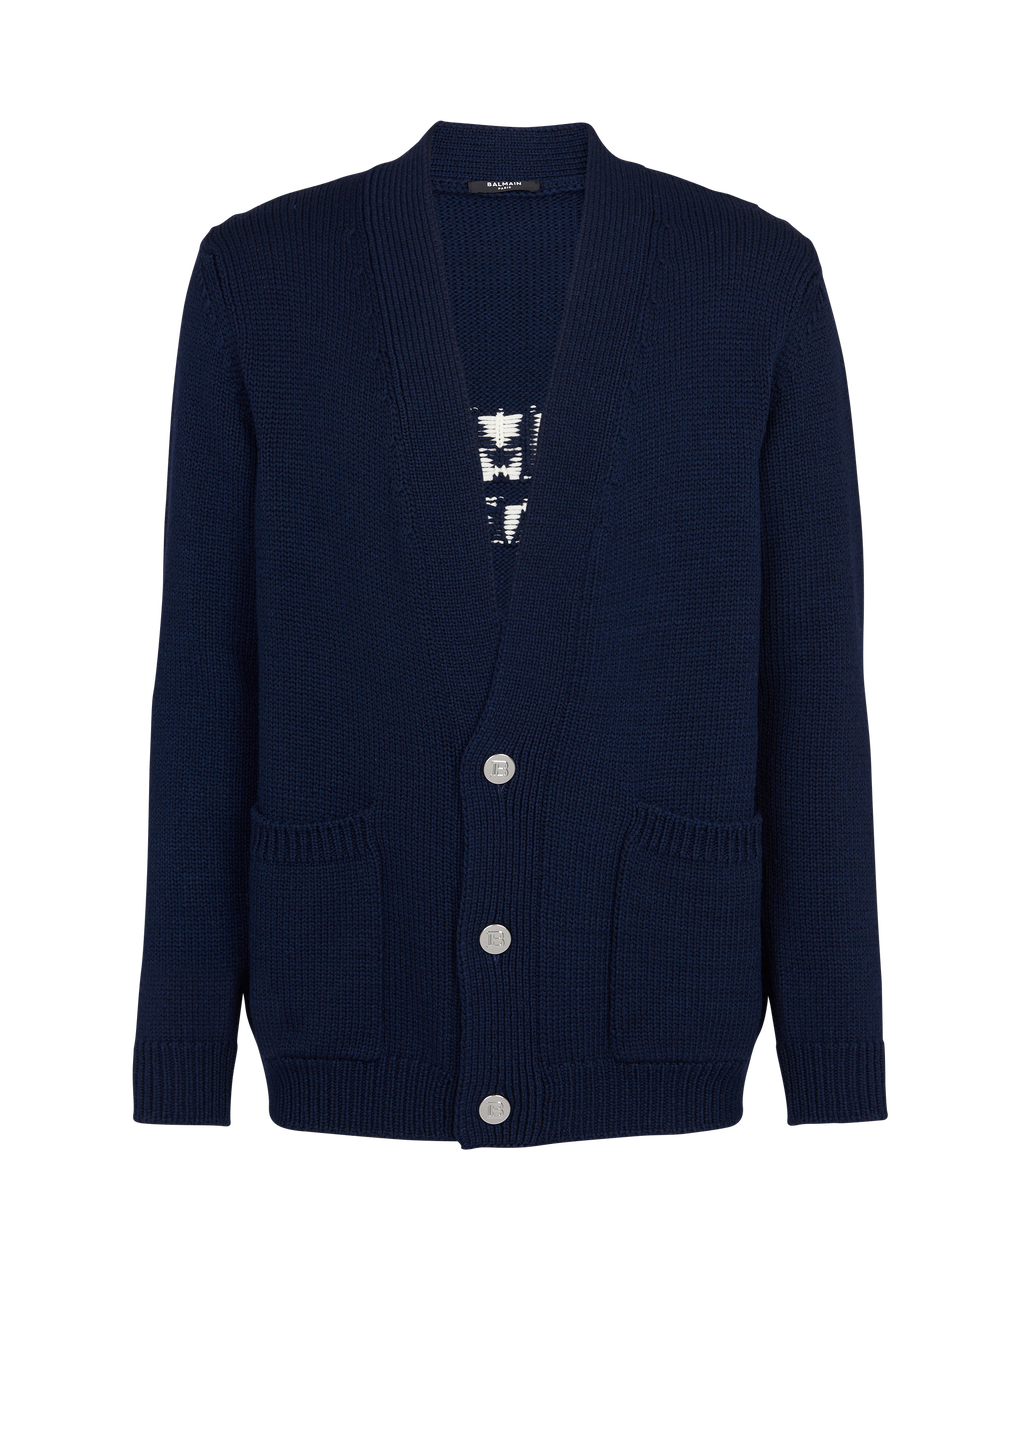 Cardigan in maglia con logo Balmain Paris, blu, hi-res